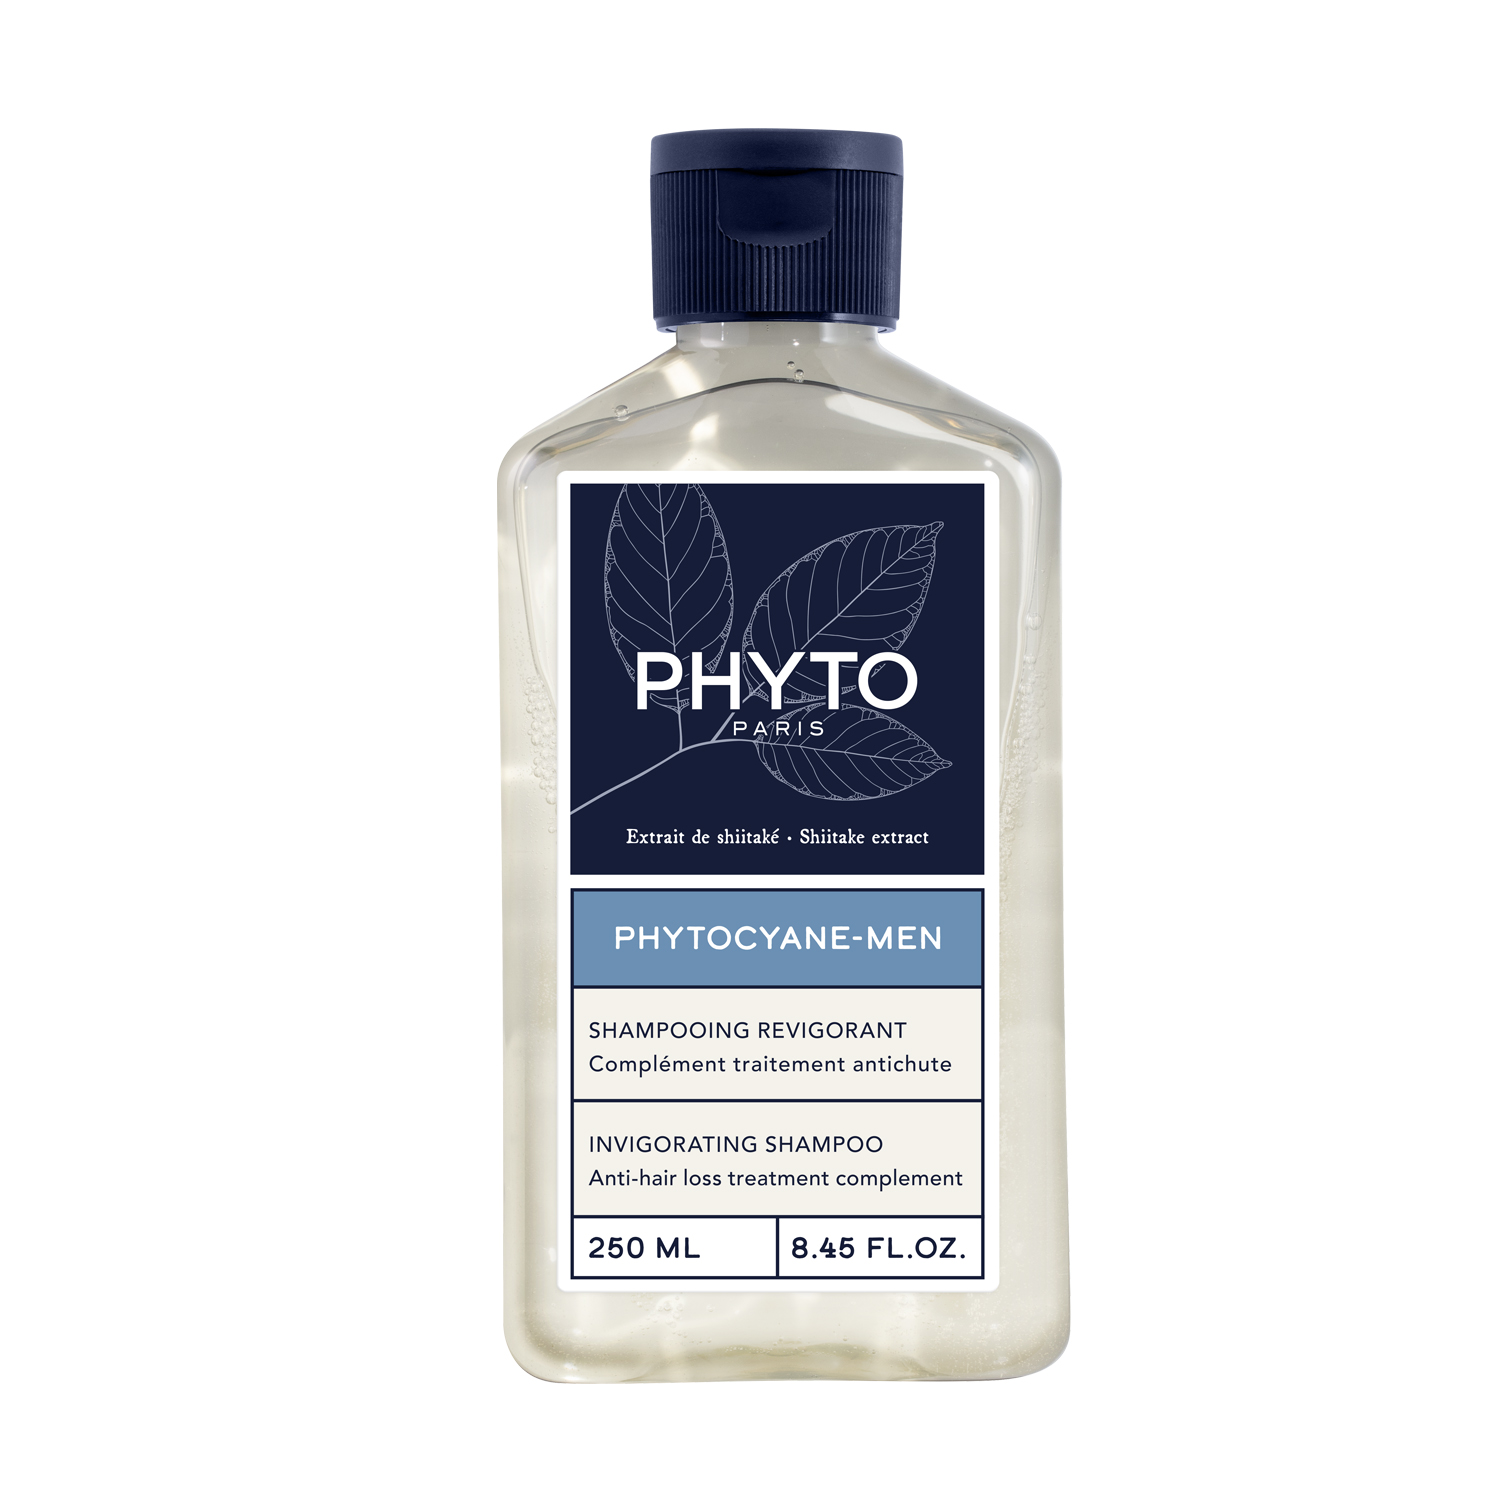 PHYTO PHYTOCYANE укрепляющий шампунь для волос 250мл phyto укрепляющий шампунь фитоциан 250 мл phyto phytocyane